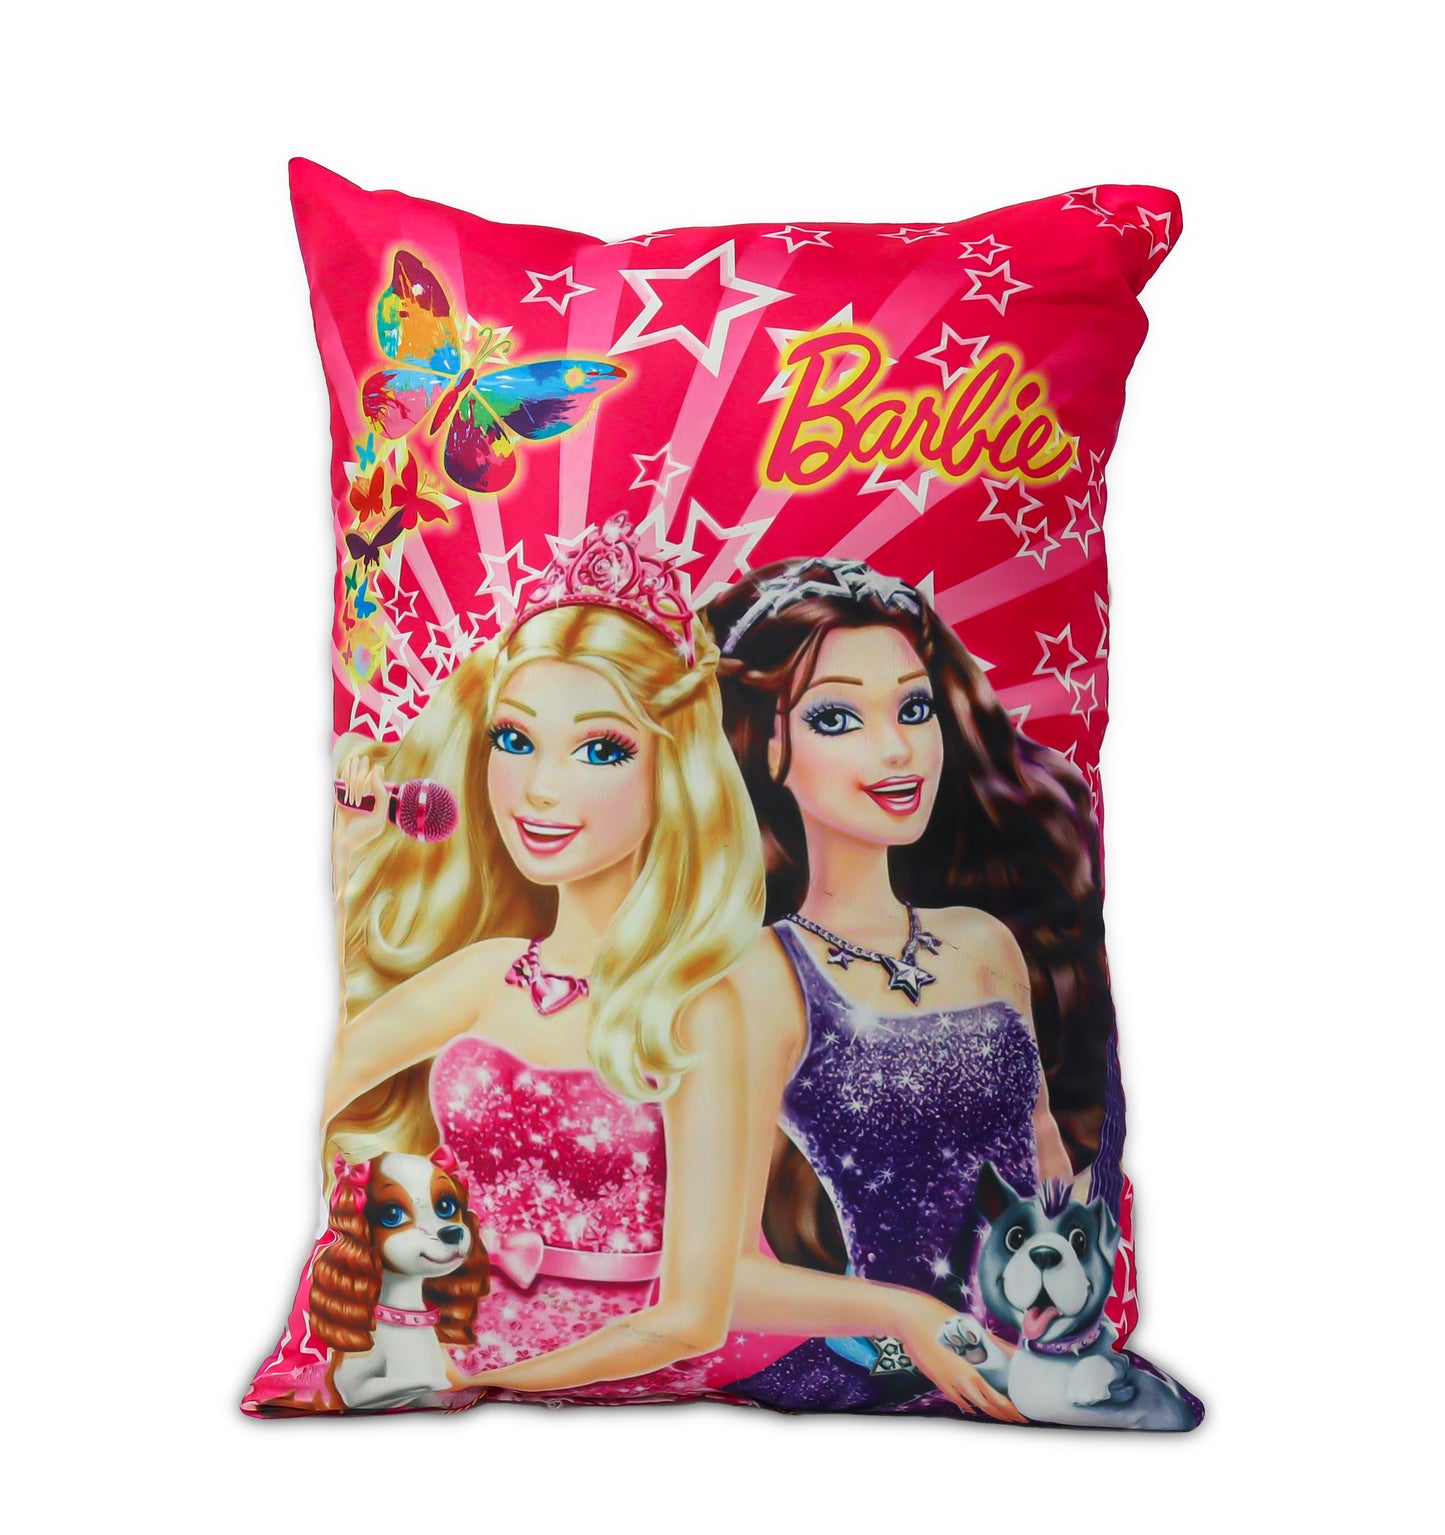 Barbie Twins Filled Cushion